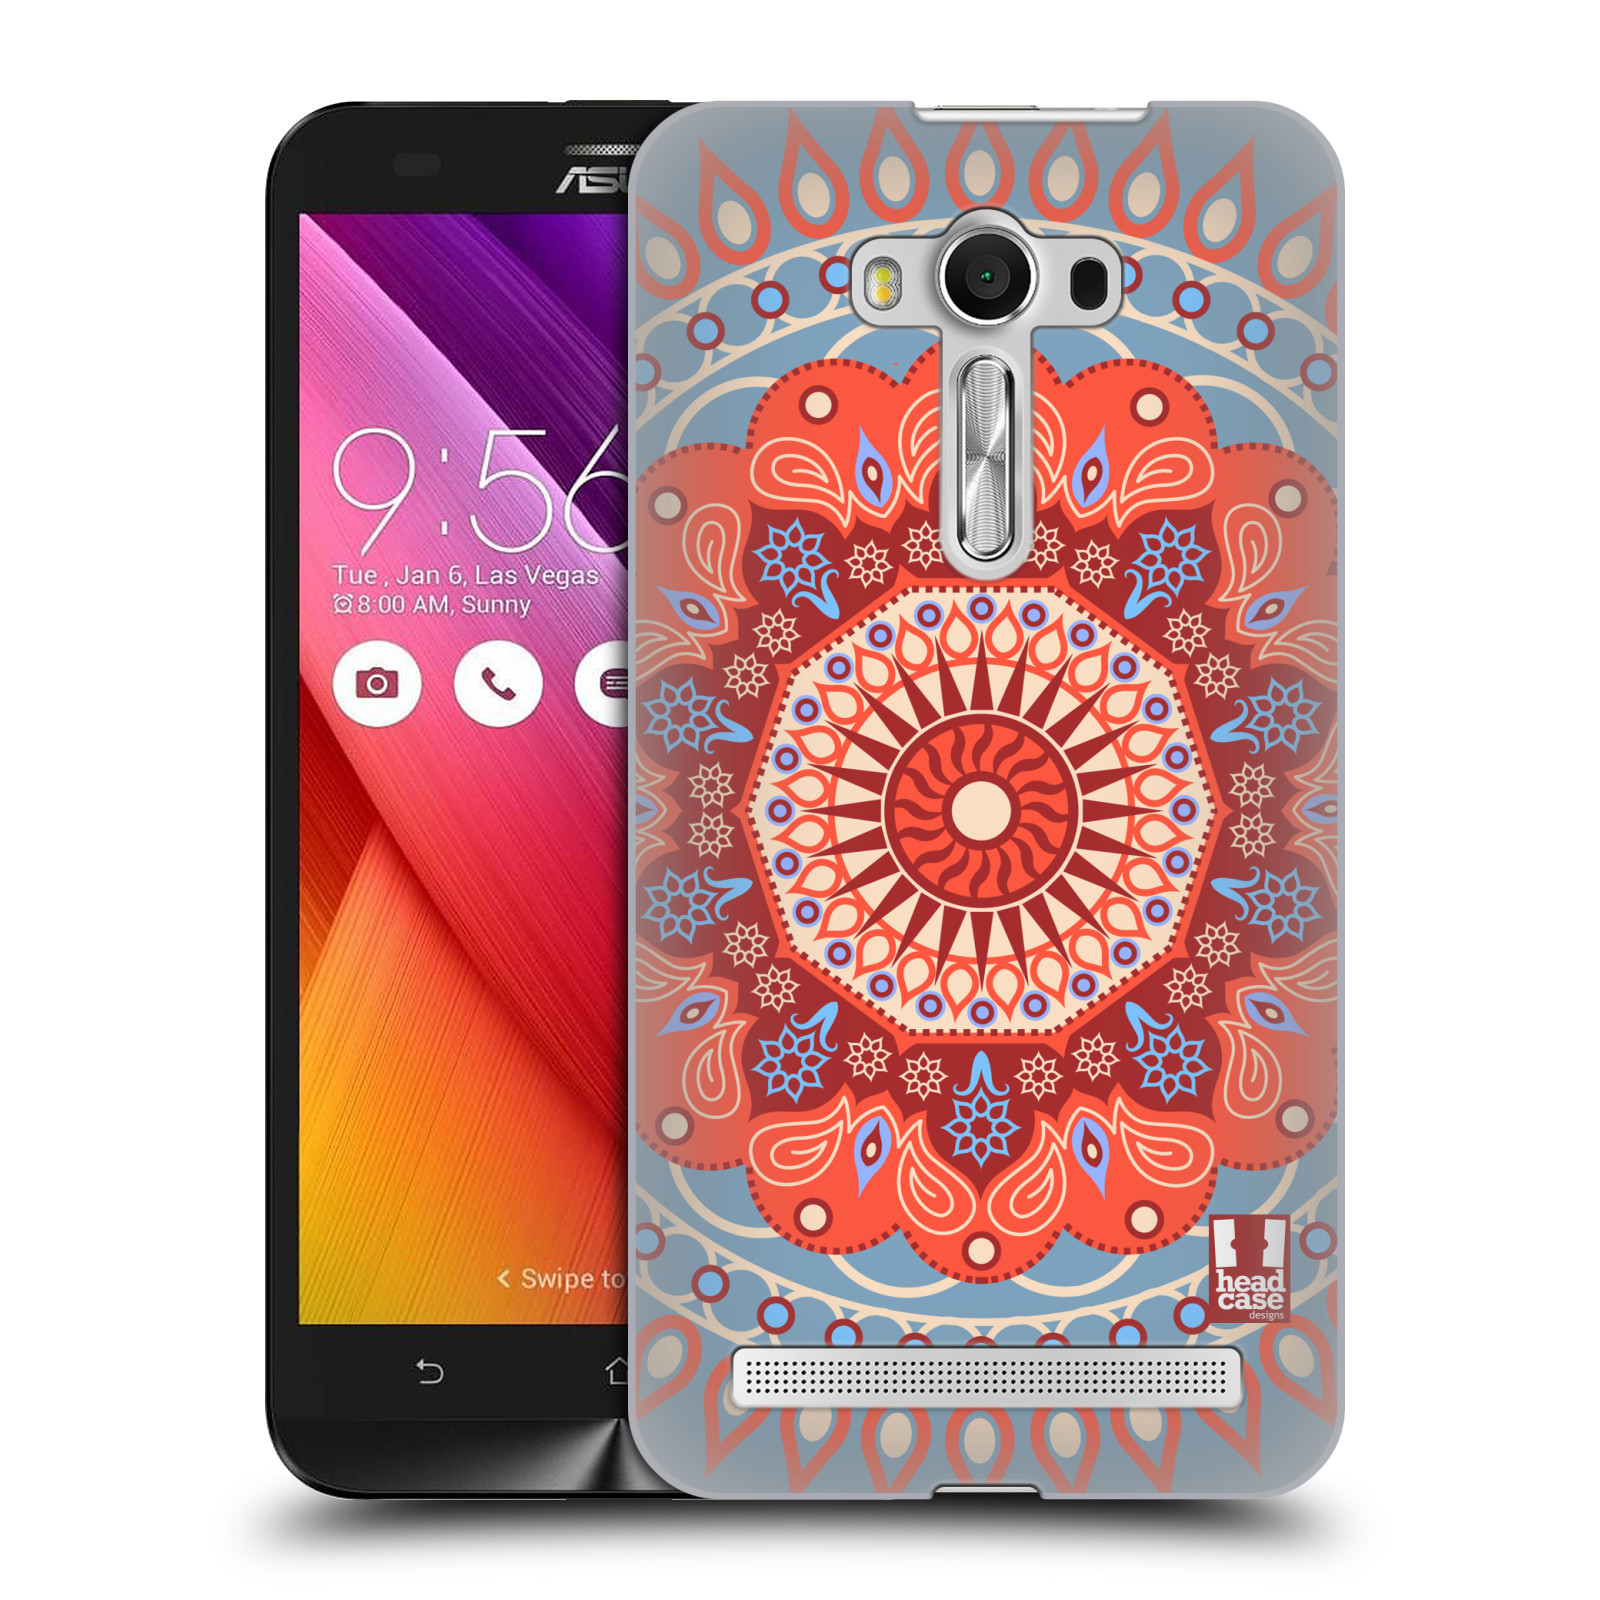 HEAD CASE plastový obal na mobil Asus Zenfone 2 LASER (5,5 displej ZE550KL) vzor Indie Mandala slunce barevný motiv ČERVENÁ A MODRÁ